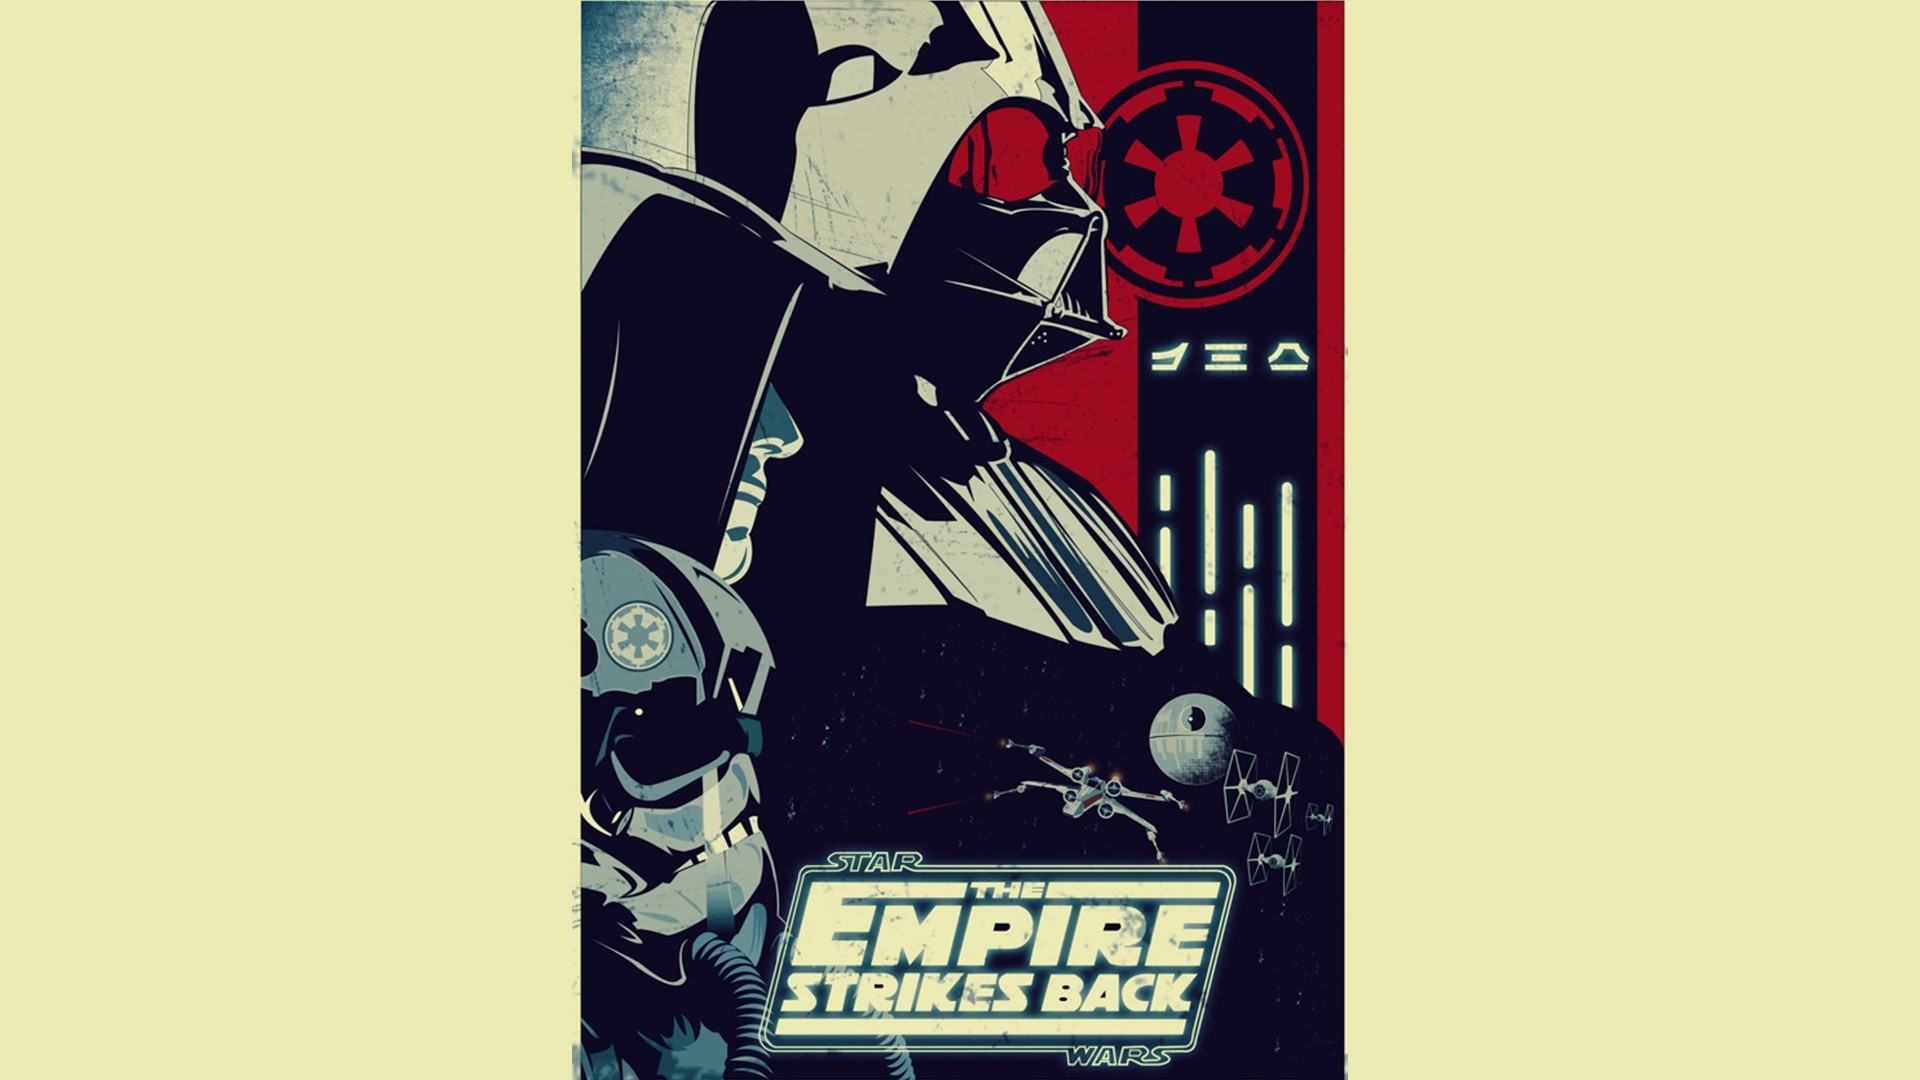 Star Wars, Movies Wallpaper